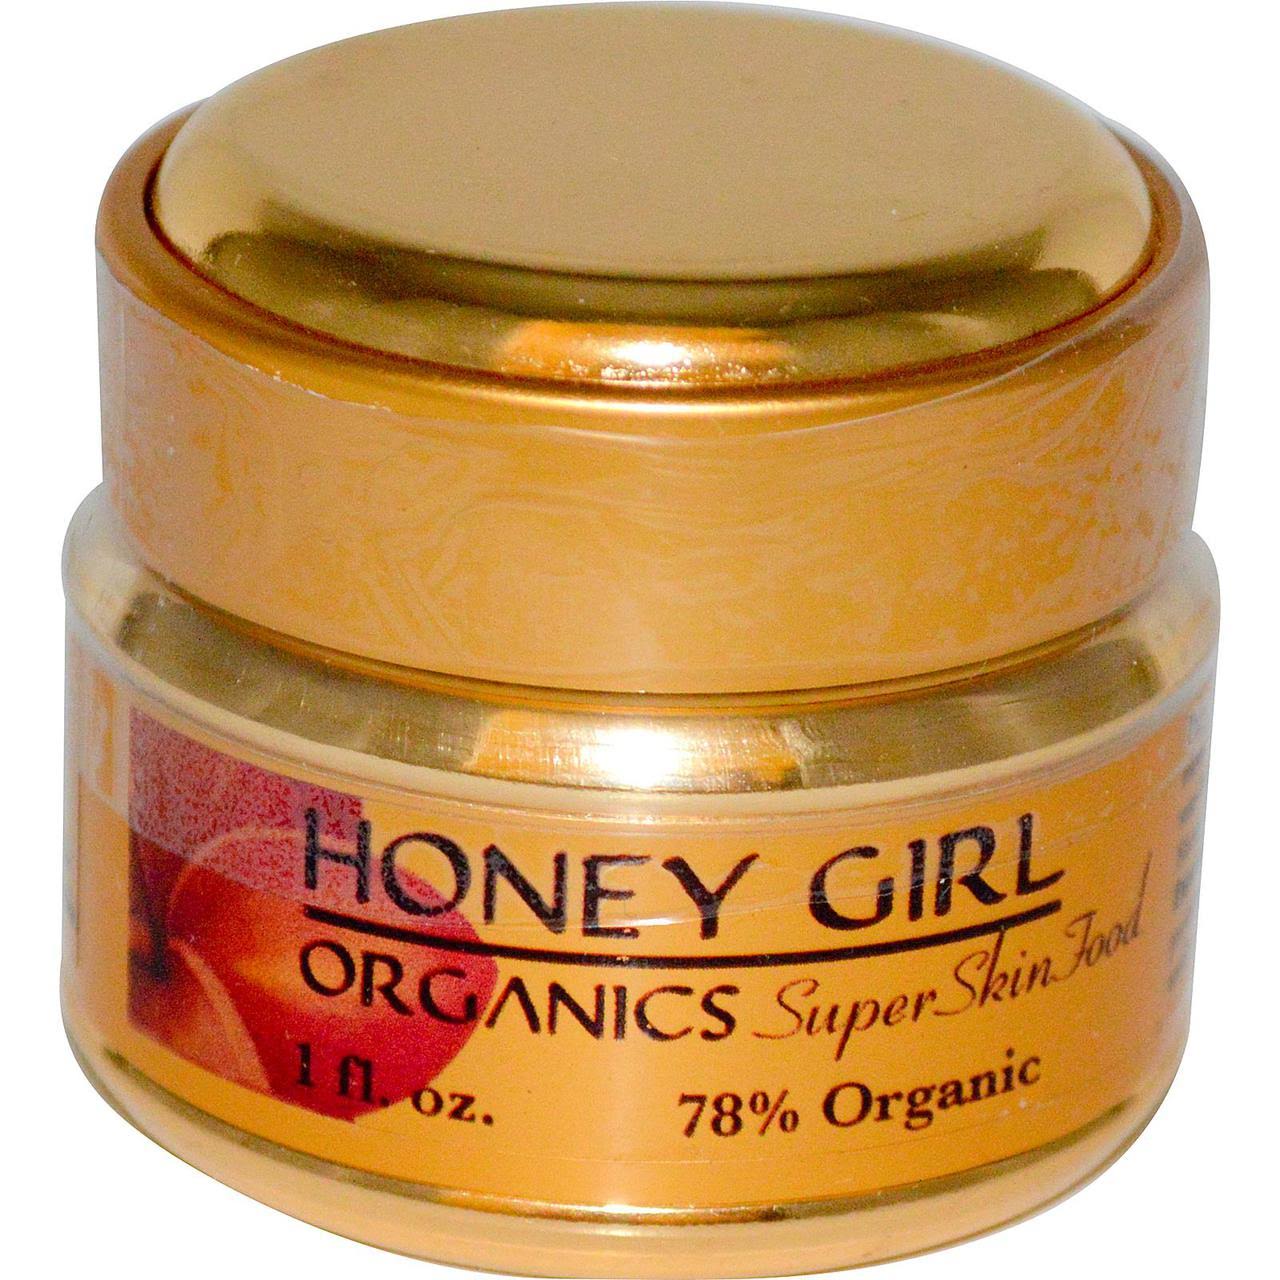 Honey Girl Organics Super Skin Food - 1oz